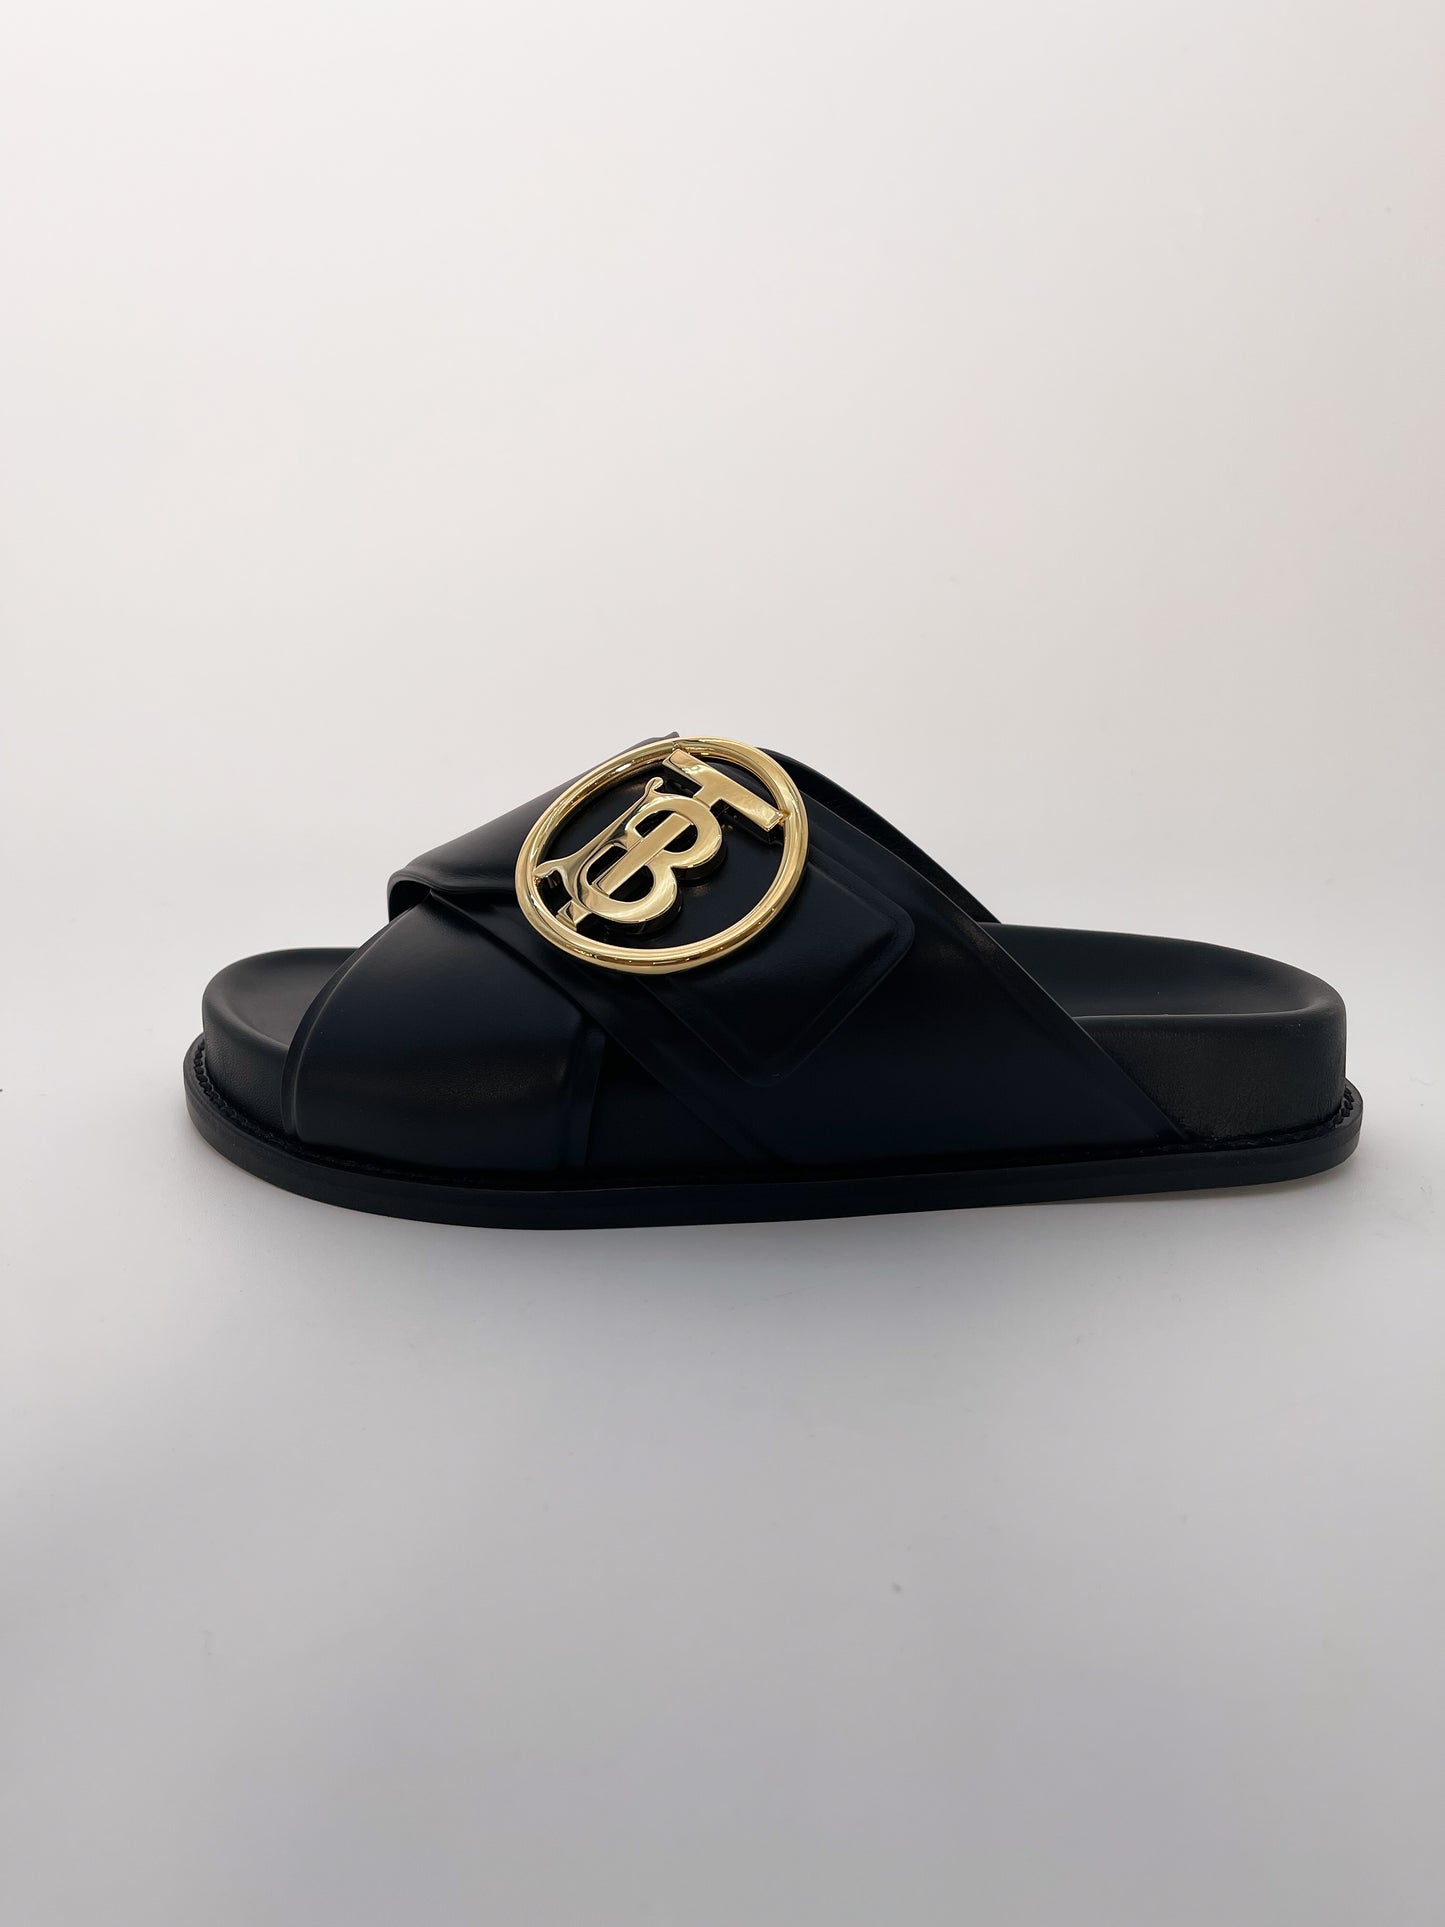 Burberry Black Monogram Slide Sandals Size 38